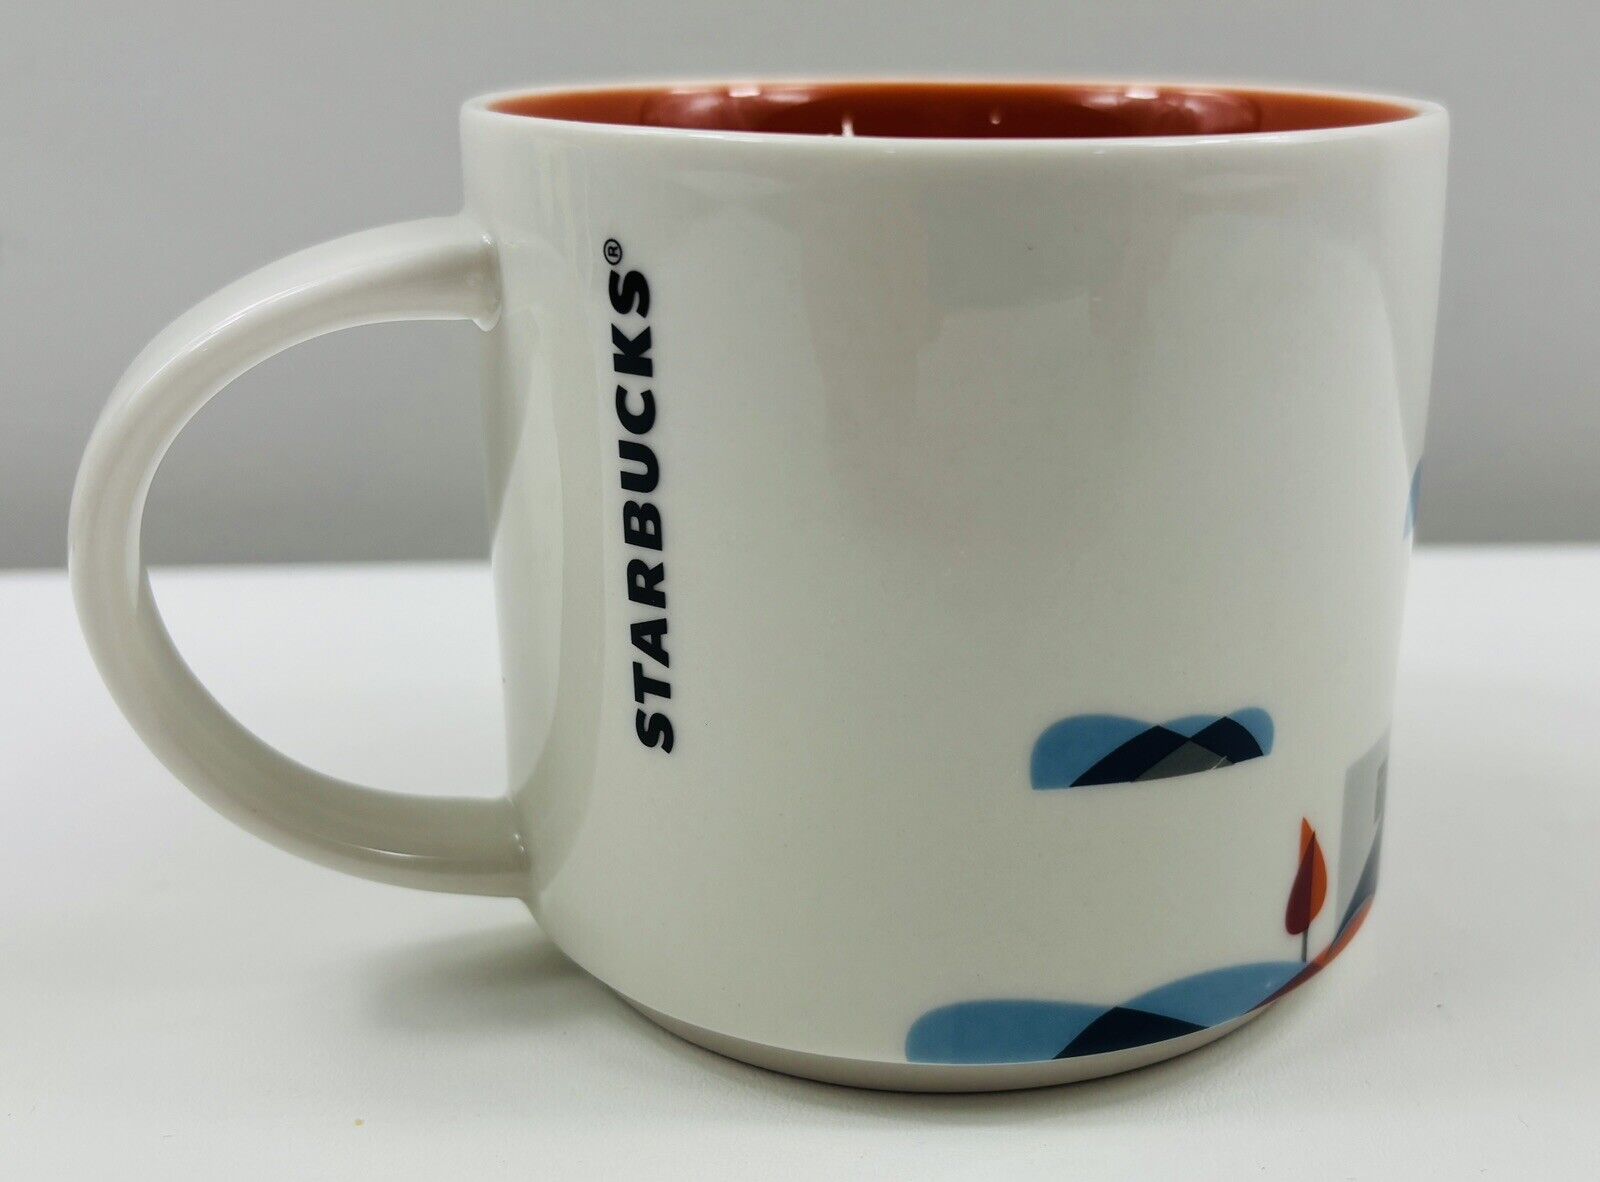 Starbucks Chicago “You Are Here Series” Mug 14 fl oz Coffee Mug Cup 2015